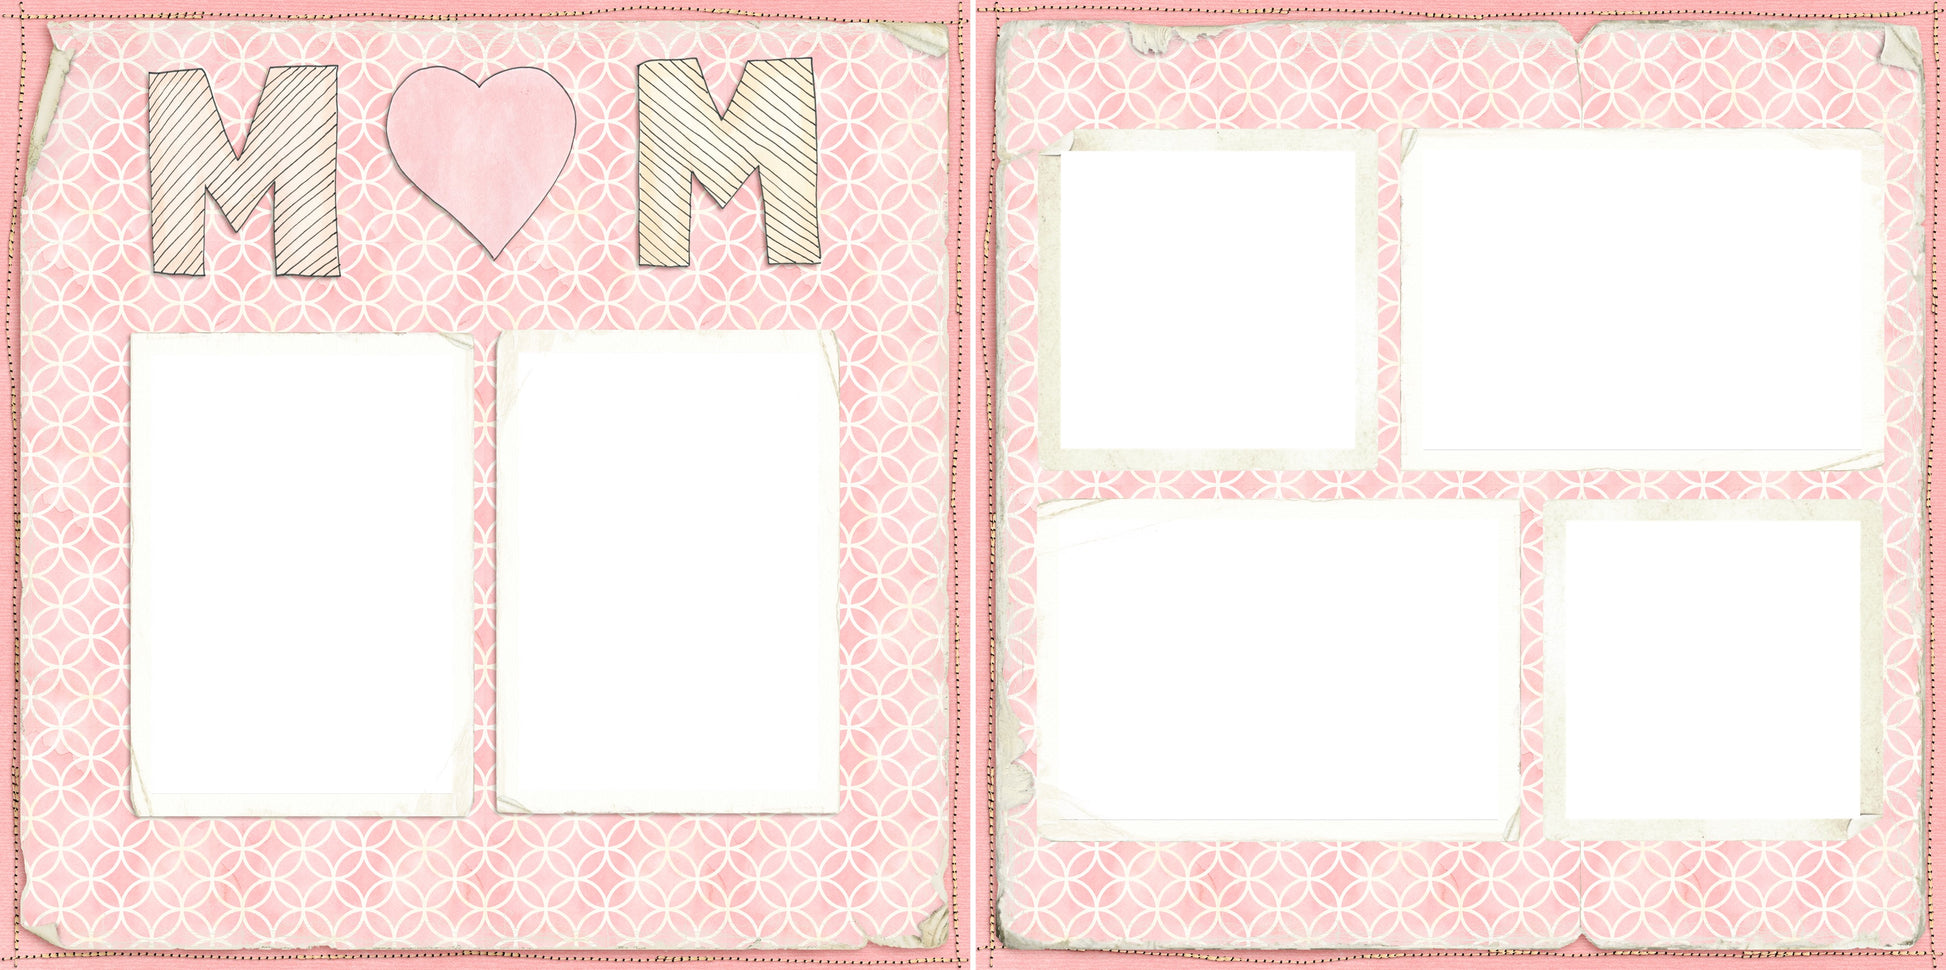 Mom - Digital Scrapbook Pages - INSTANT DOWNLOAD - EZscrapbooks Scrapbook Layouts Grandmother, Love - Valentine, Mother